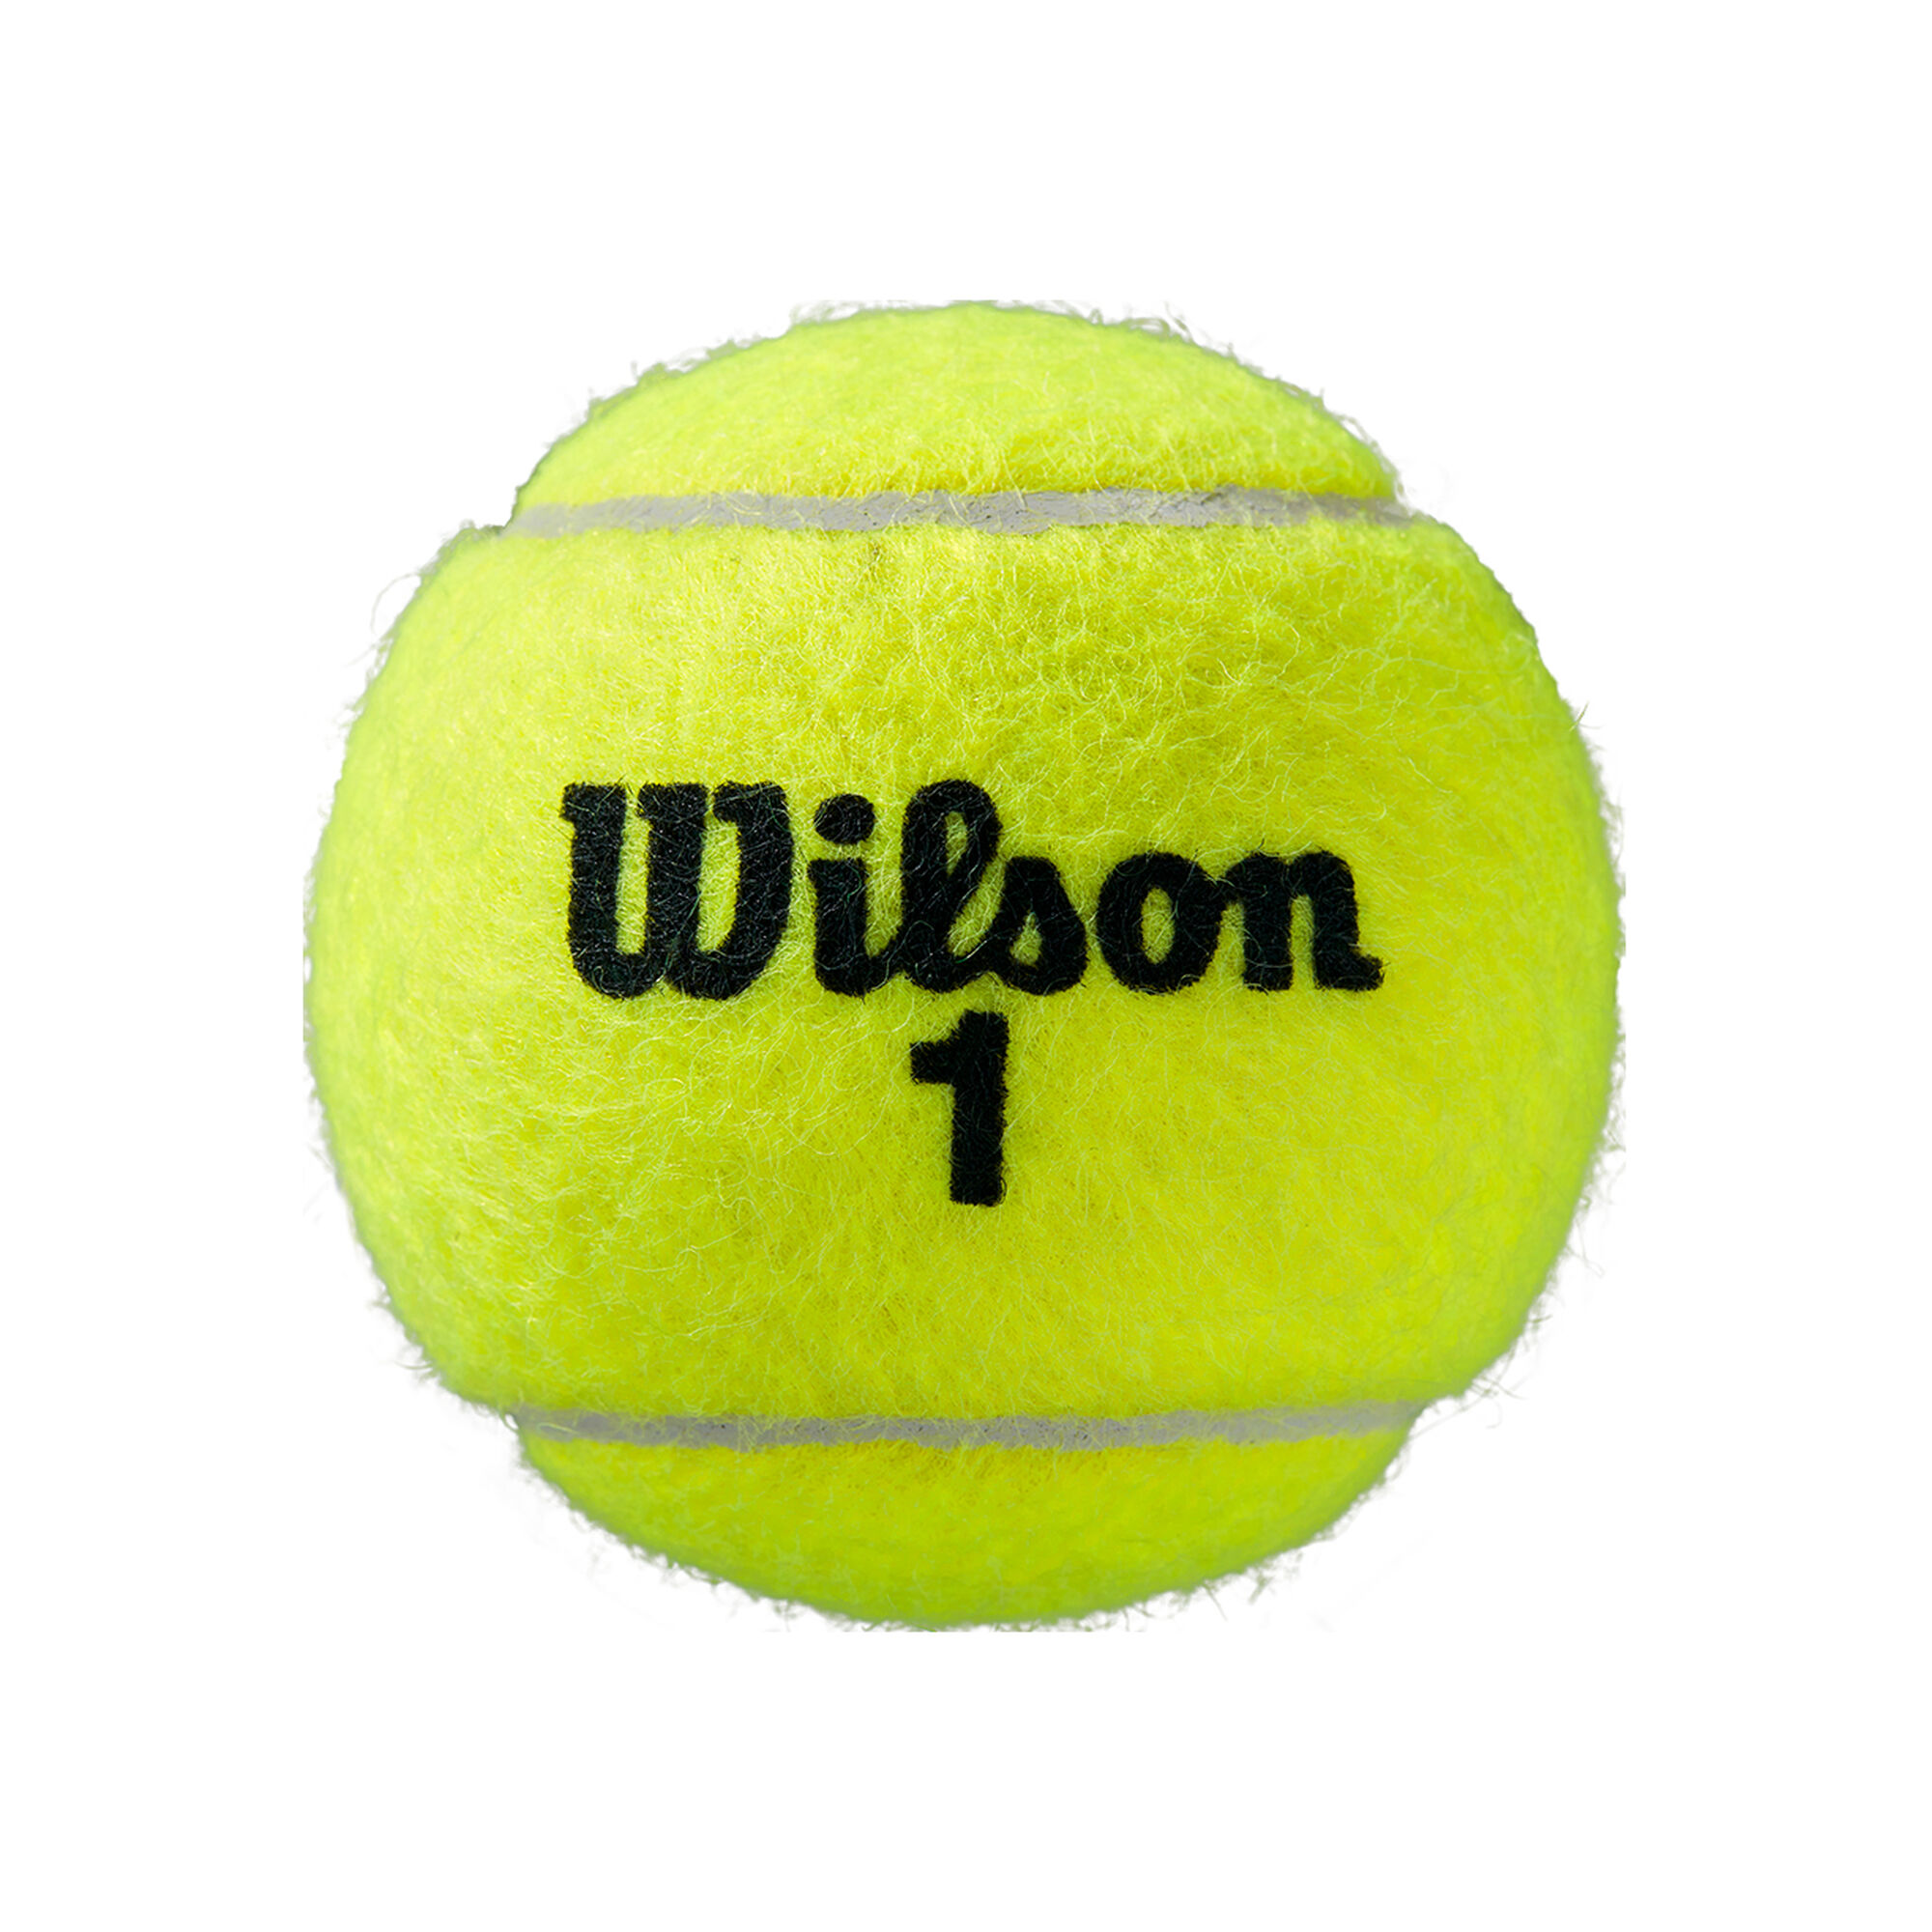 Buy Wilson Roland Garros All Court 3er online